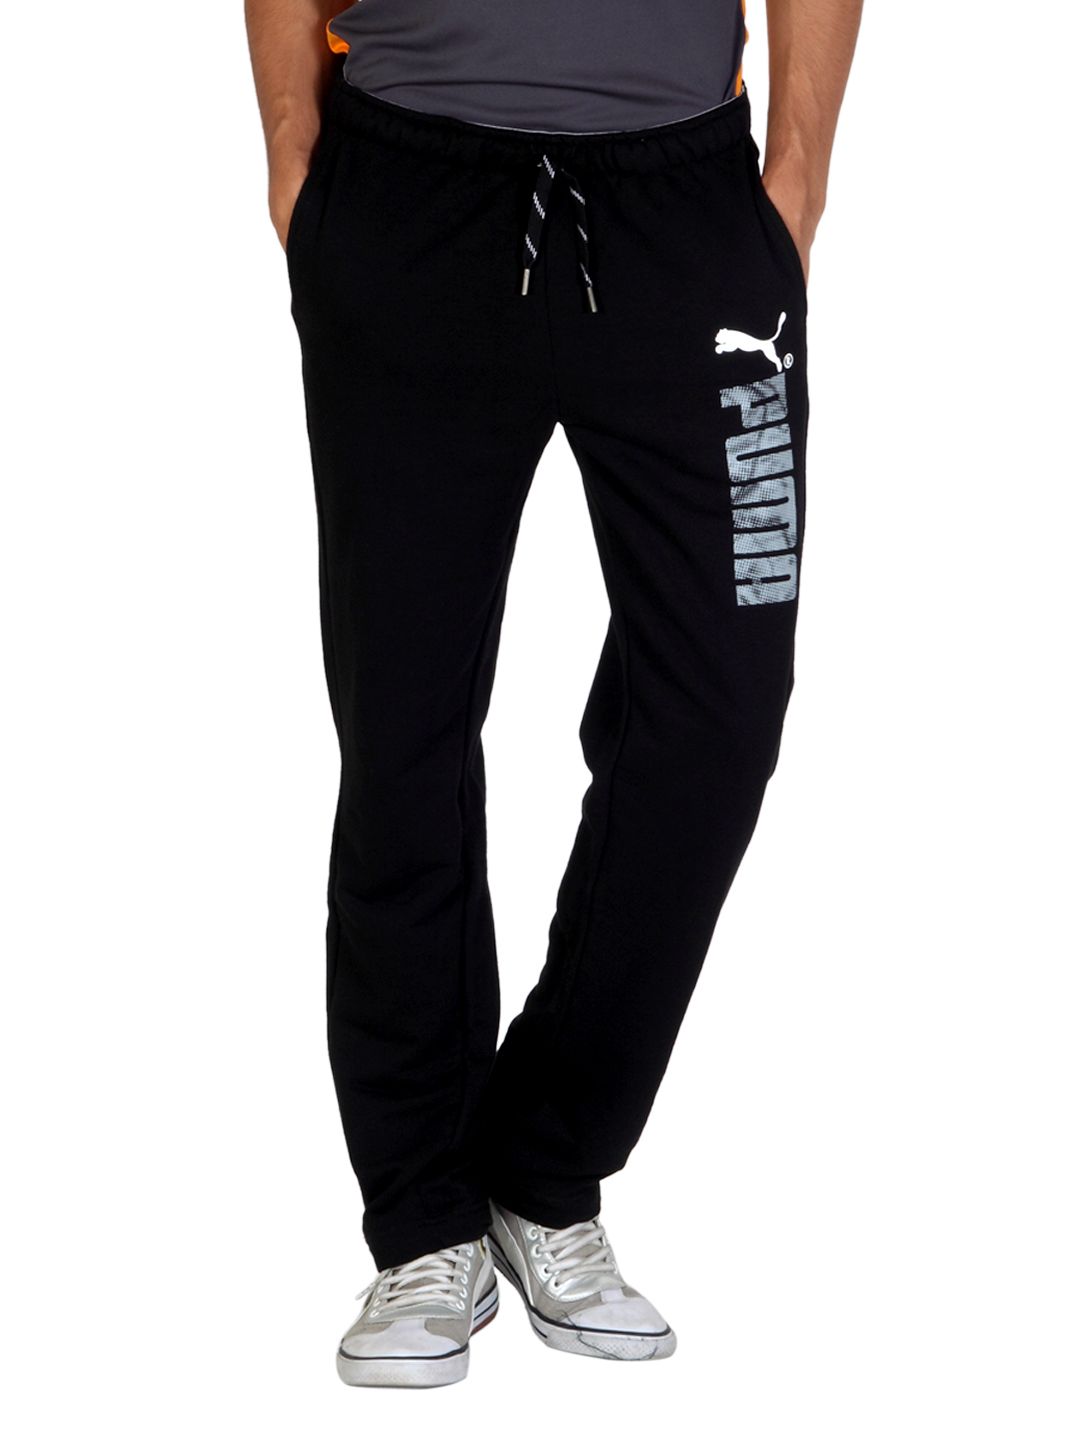 Buy Puma Men Black Track Pants - 293 - Apparel for Men - 67430